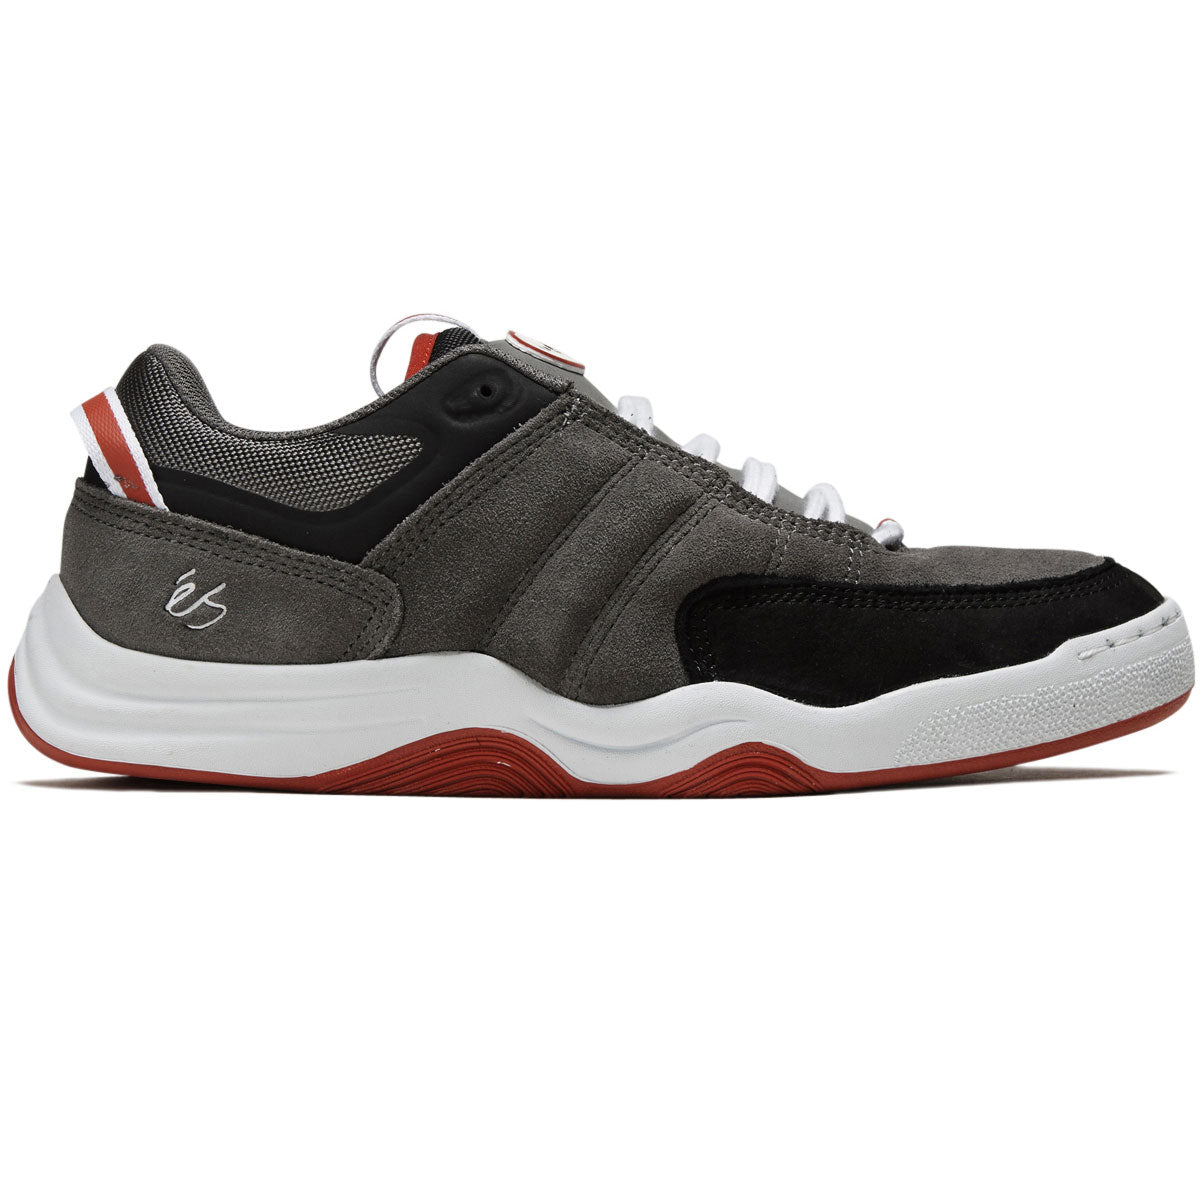 eS Evant Shoes - Grey/Black/Red image 1